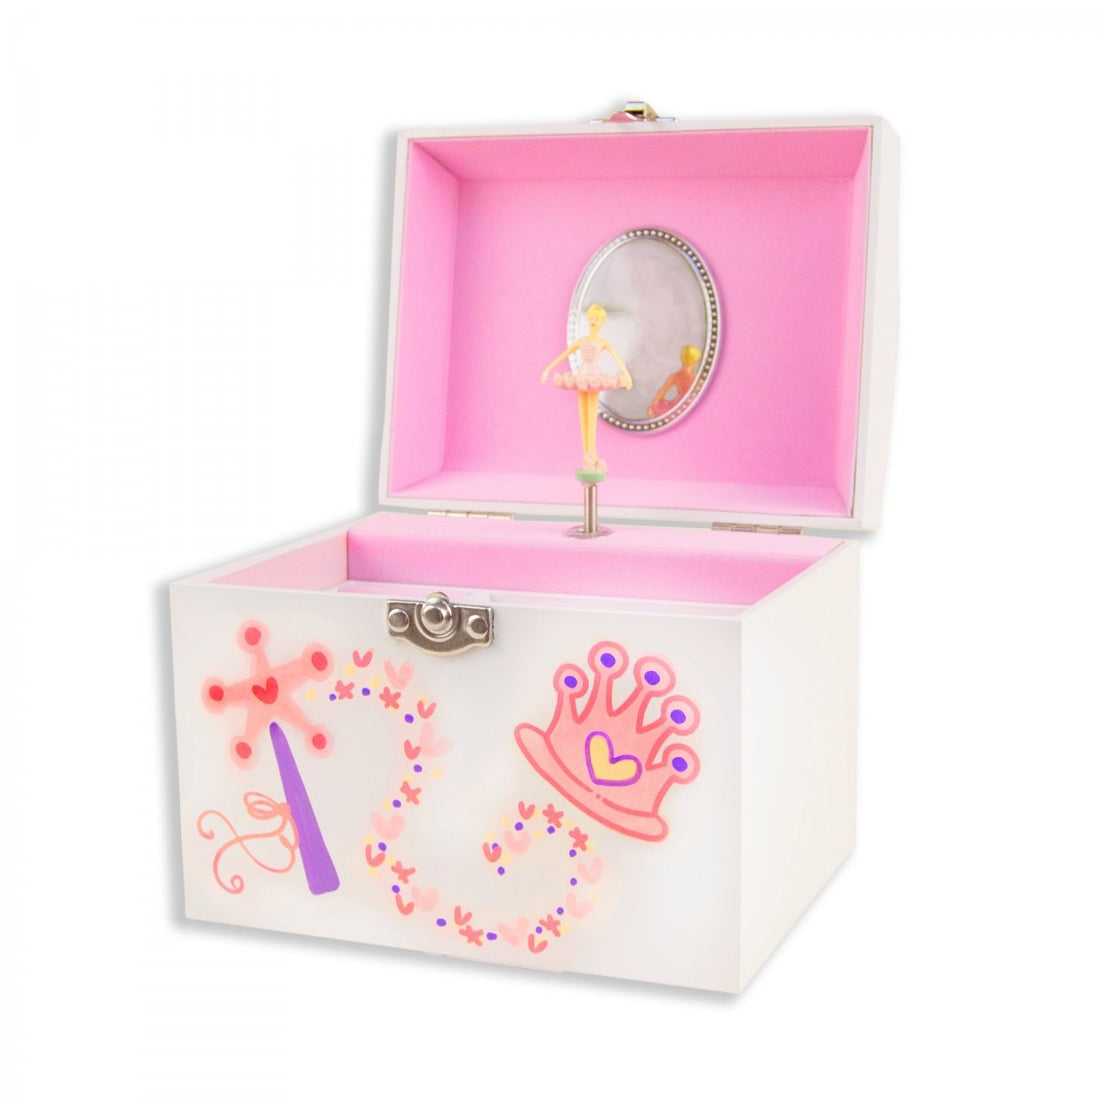 Hand Painted Jewelry Box